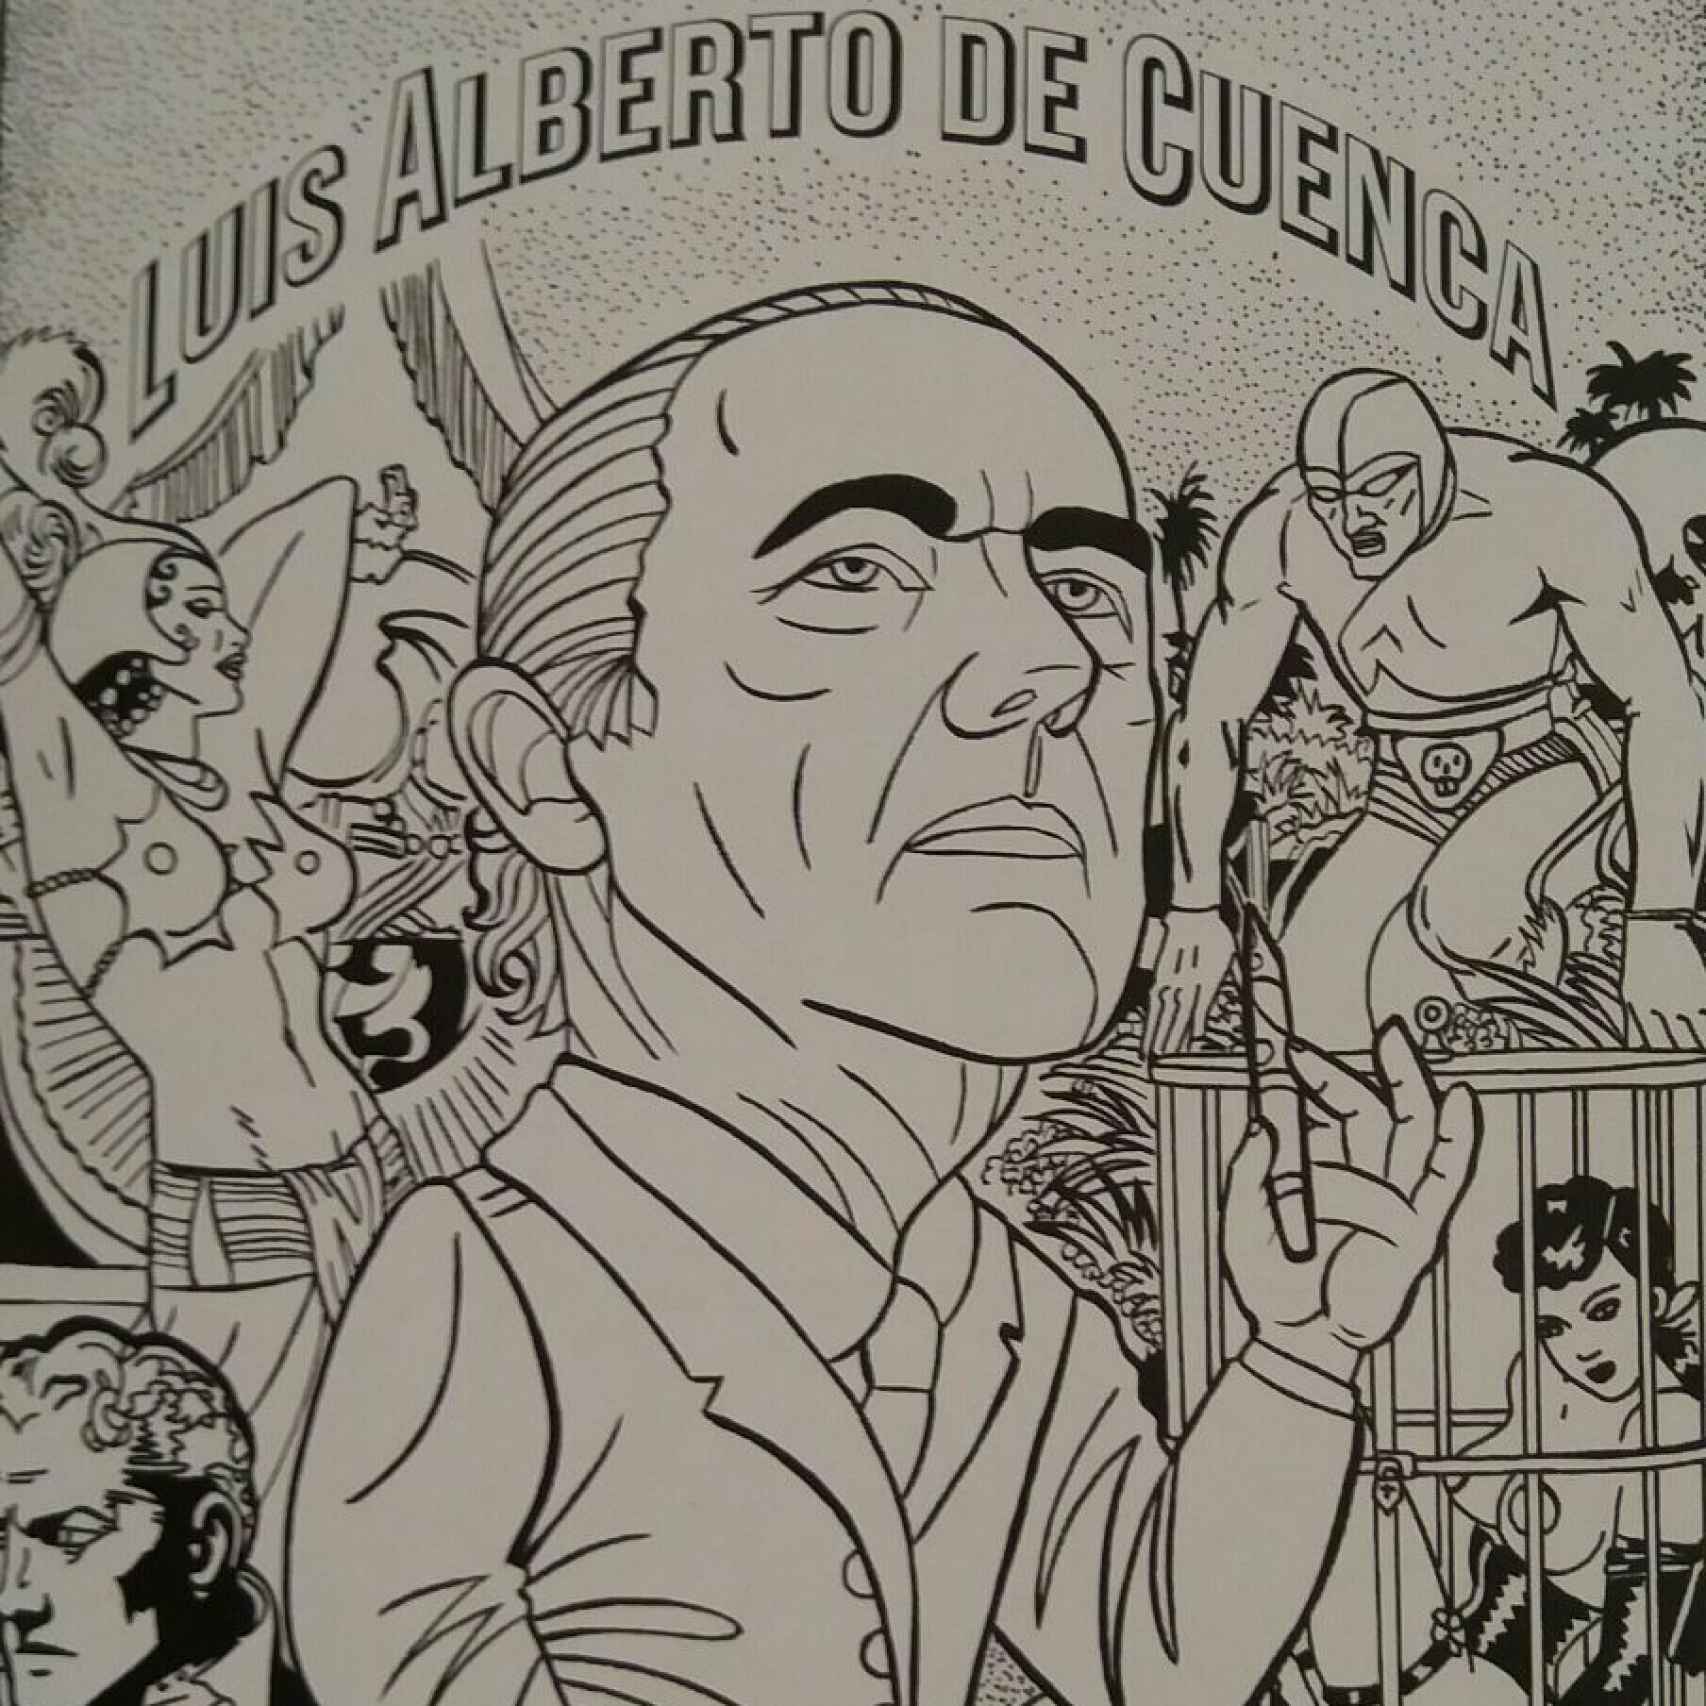 El poeta Luis Alberto de Cuenca ilustrado por Laura Pérez Vernetti.